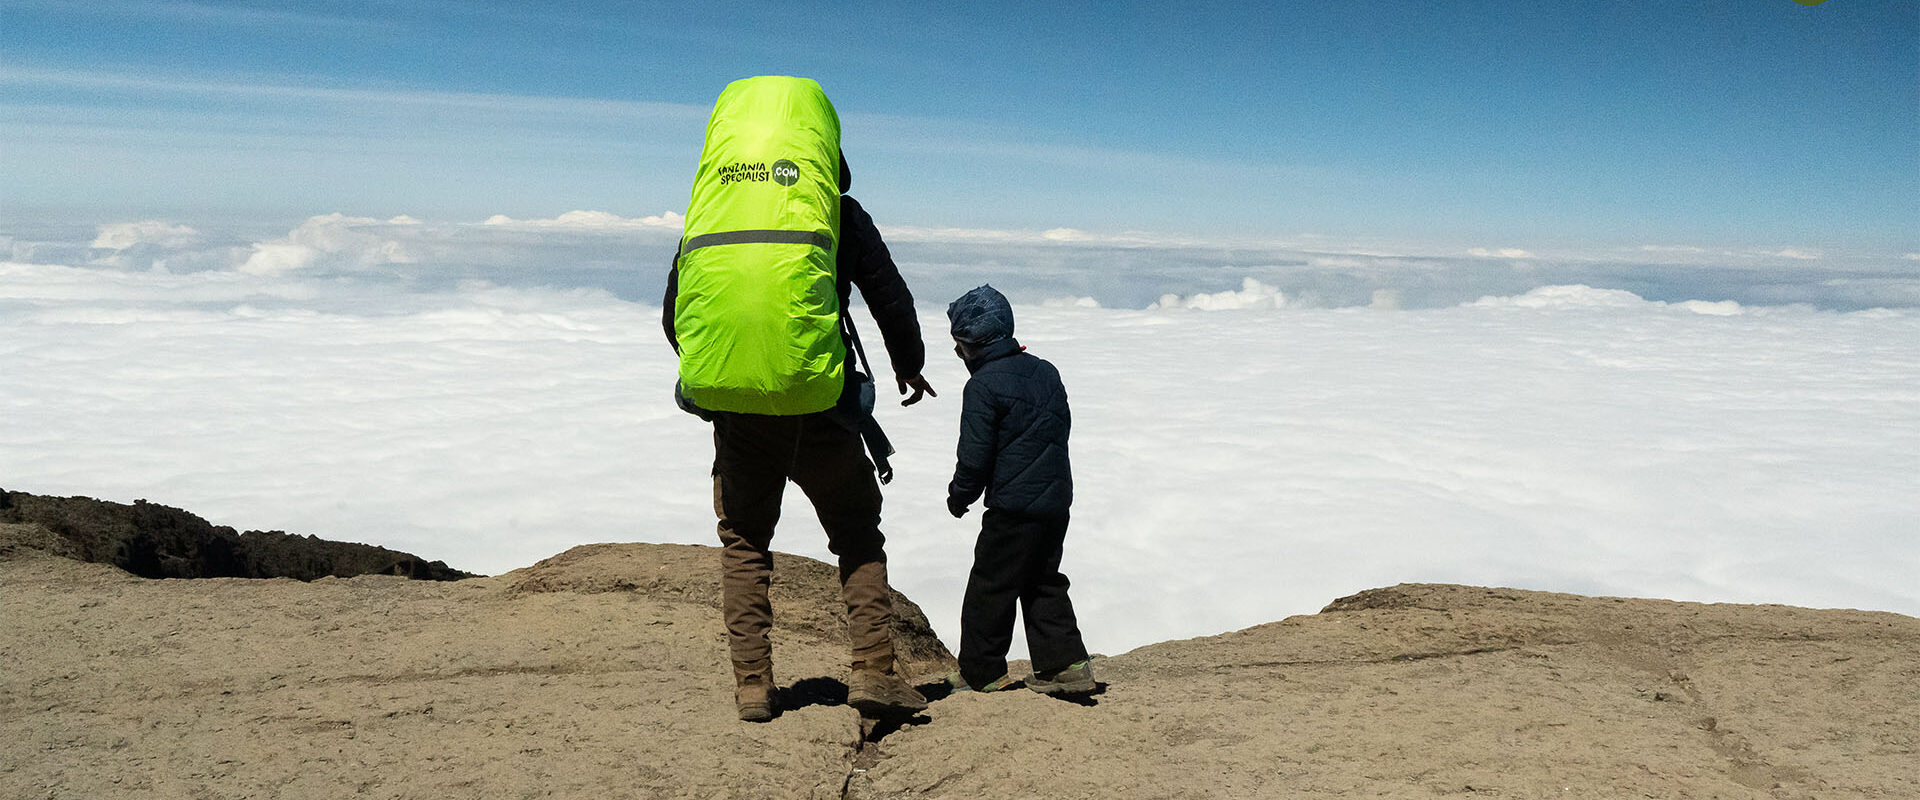 Rongai route bewandelen op Kilimanjaro